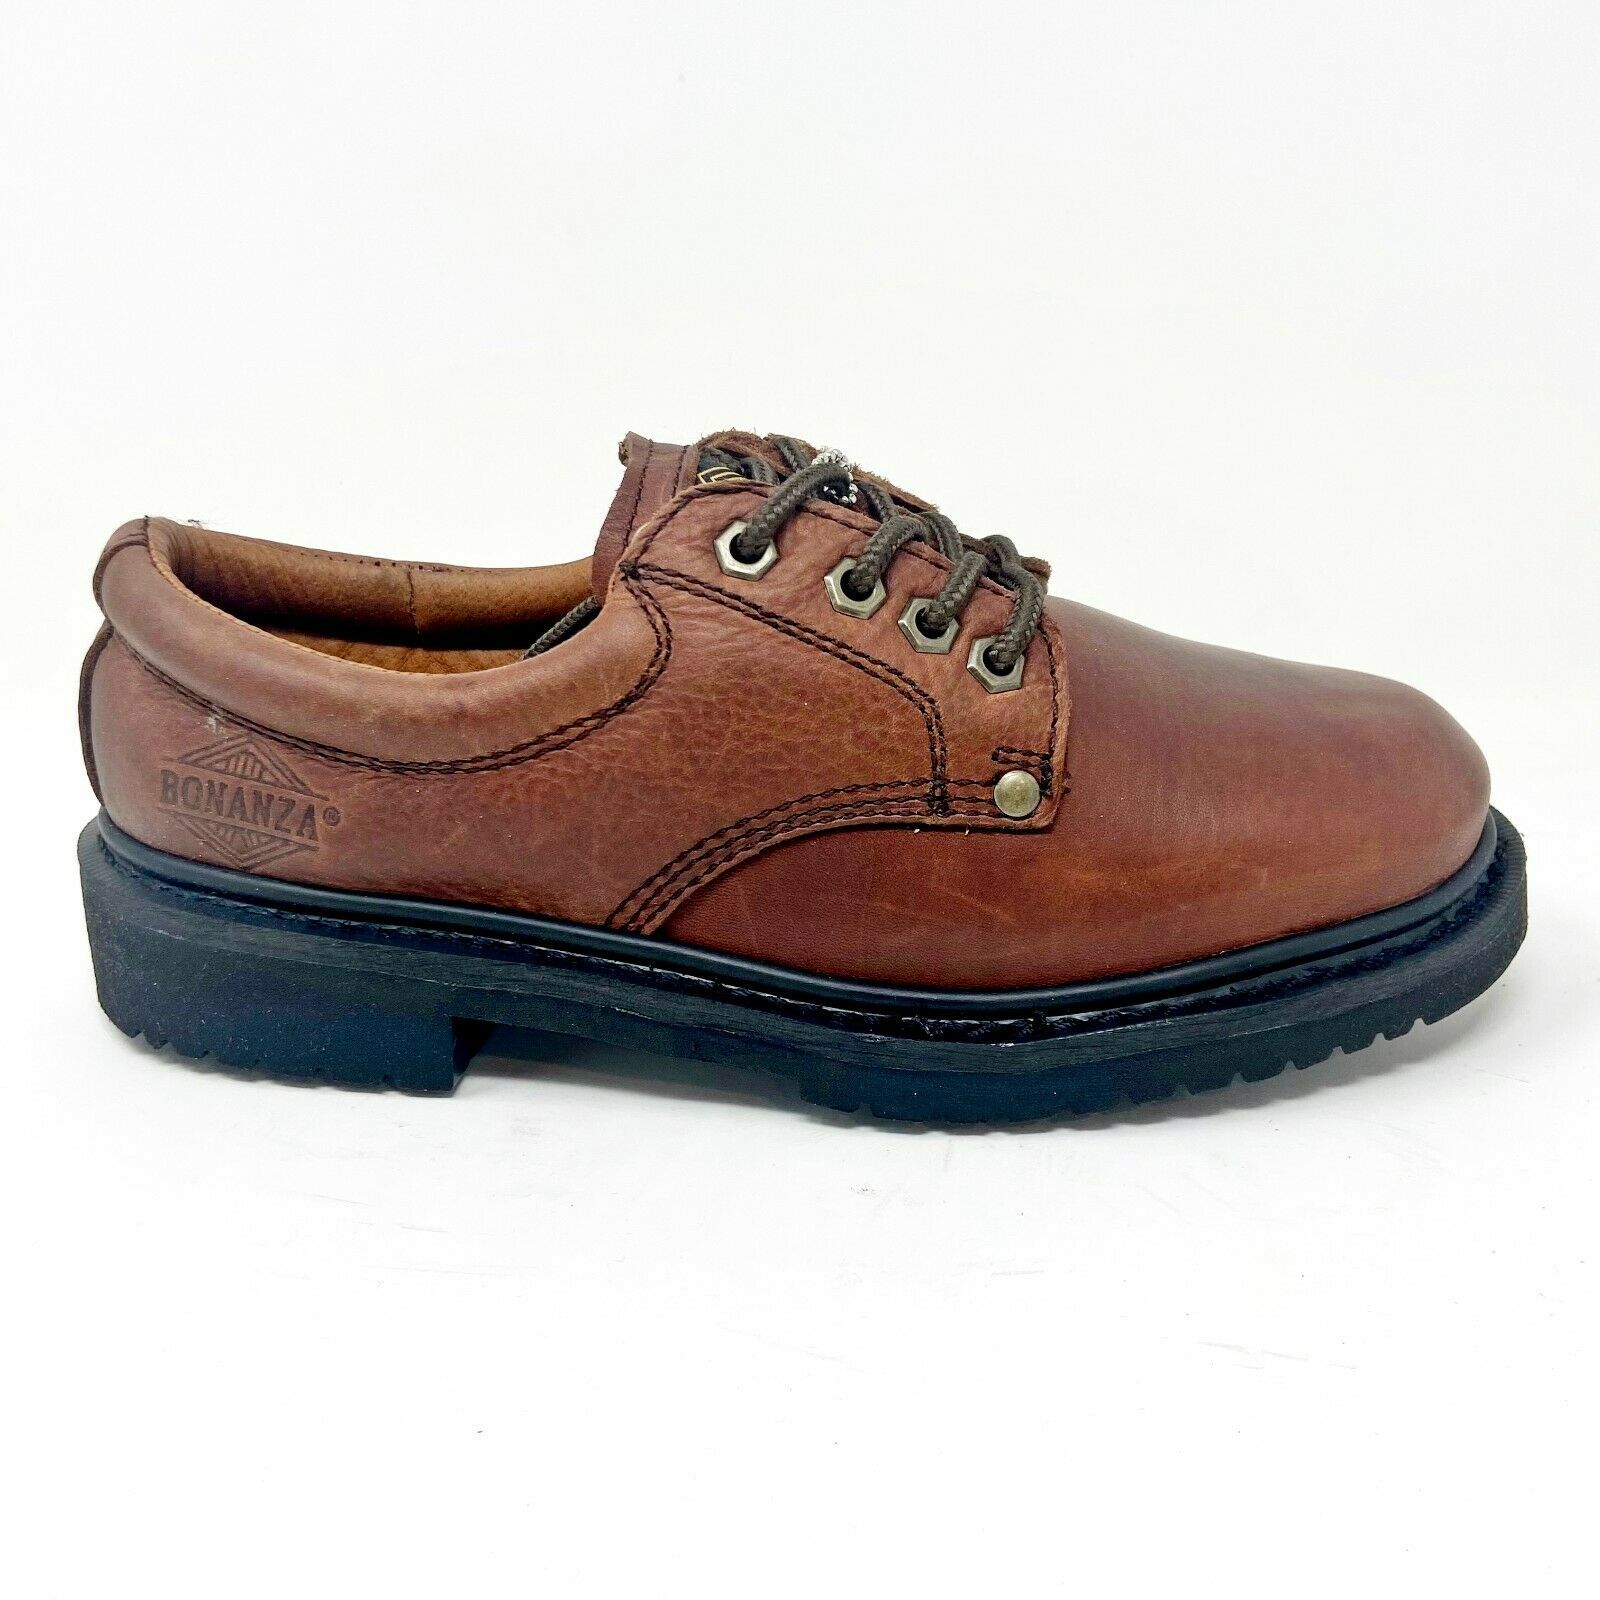 Bonanza Mens Brown Leather Slip Resistant Work Boots BA 415